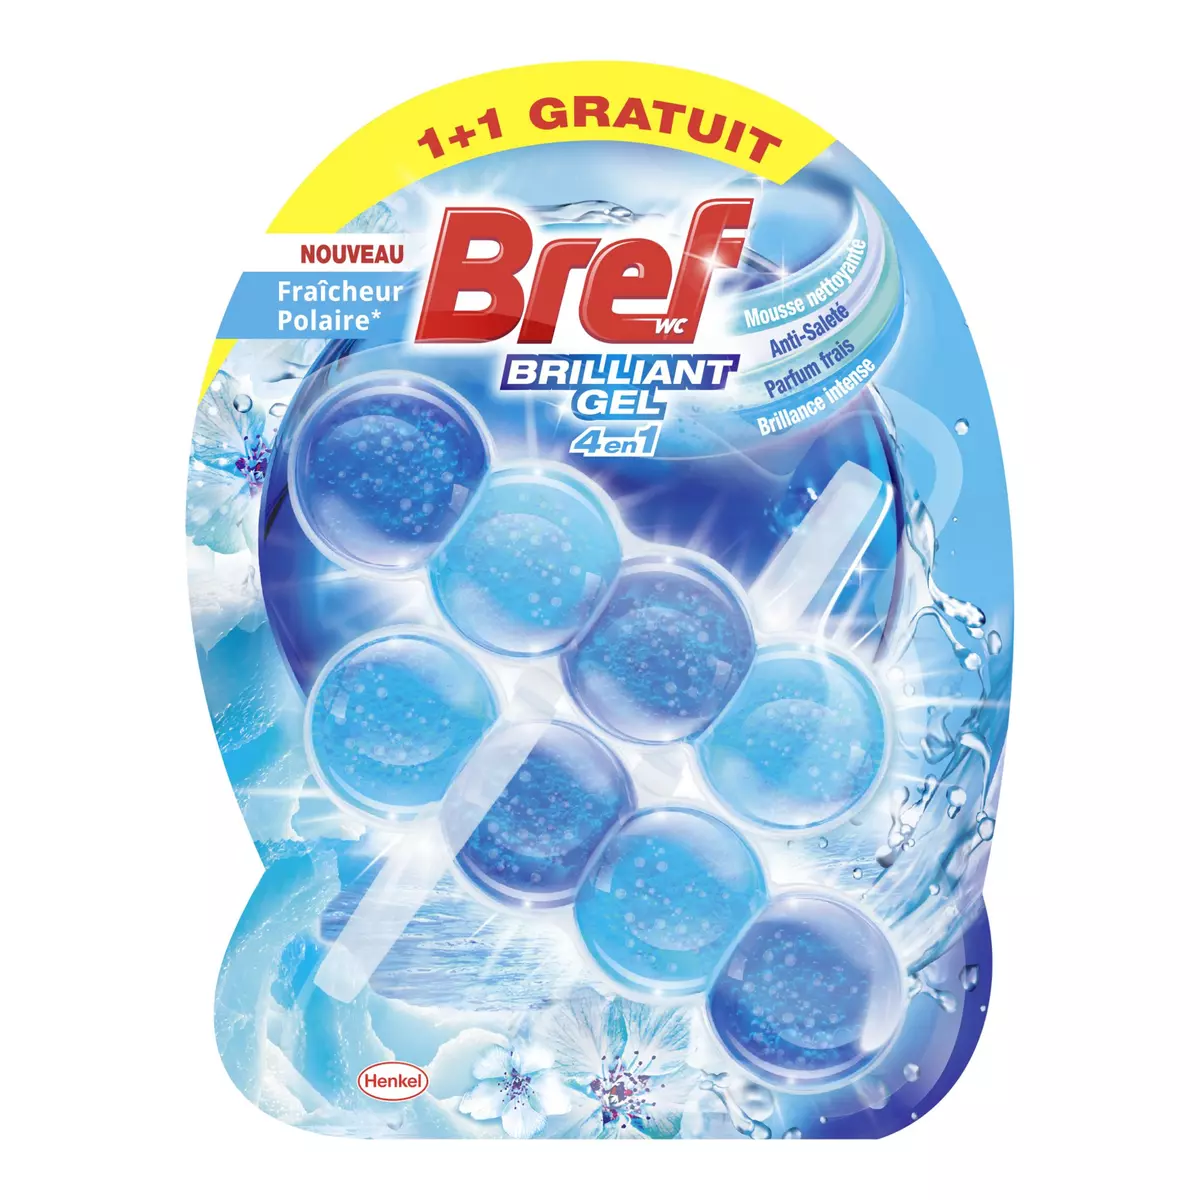 BREF Bloc WC gel fraicheur polaire 1+1 offert